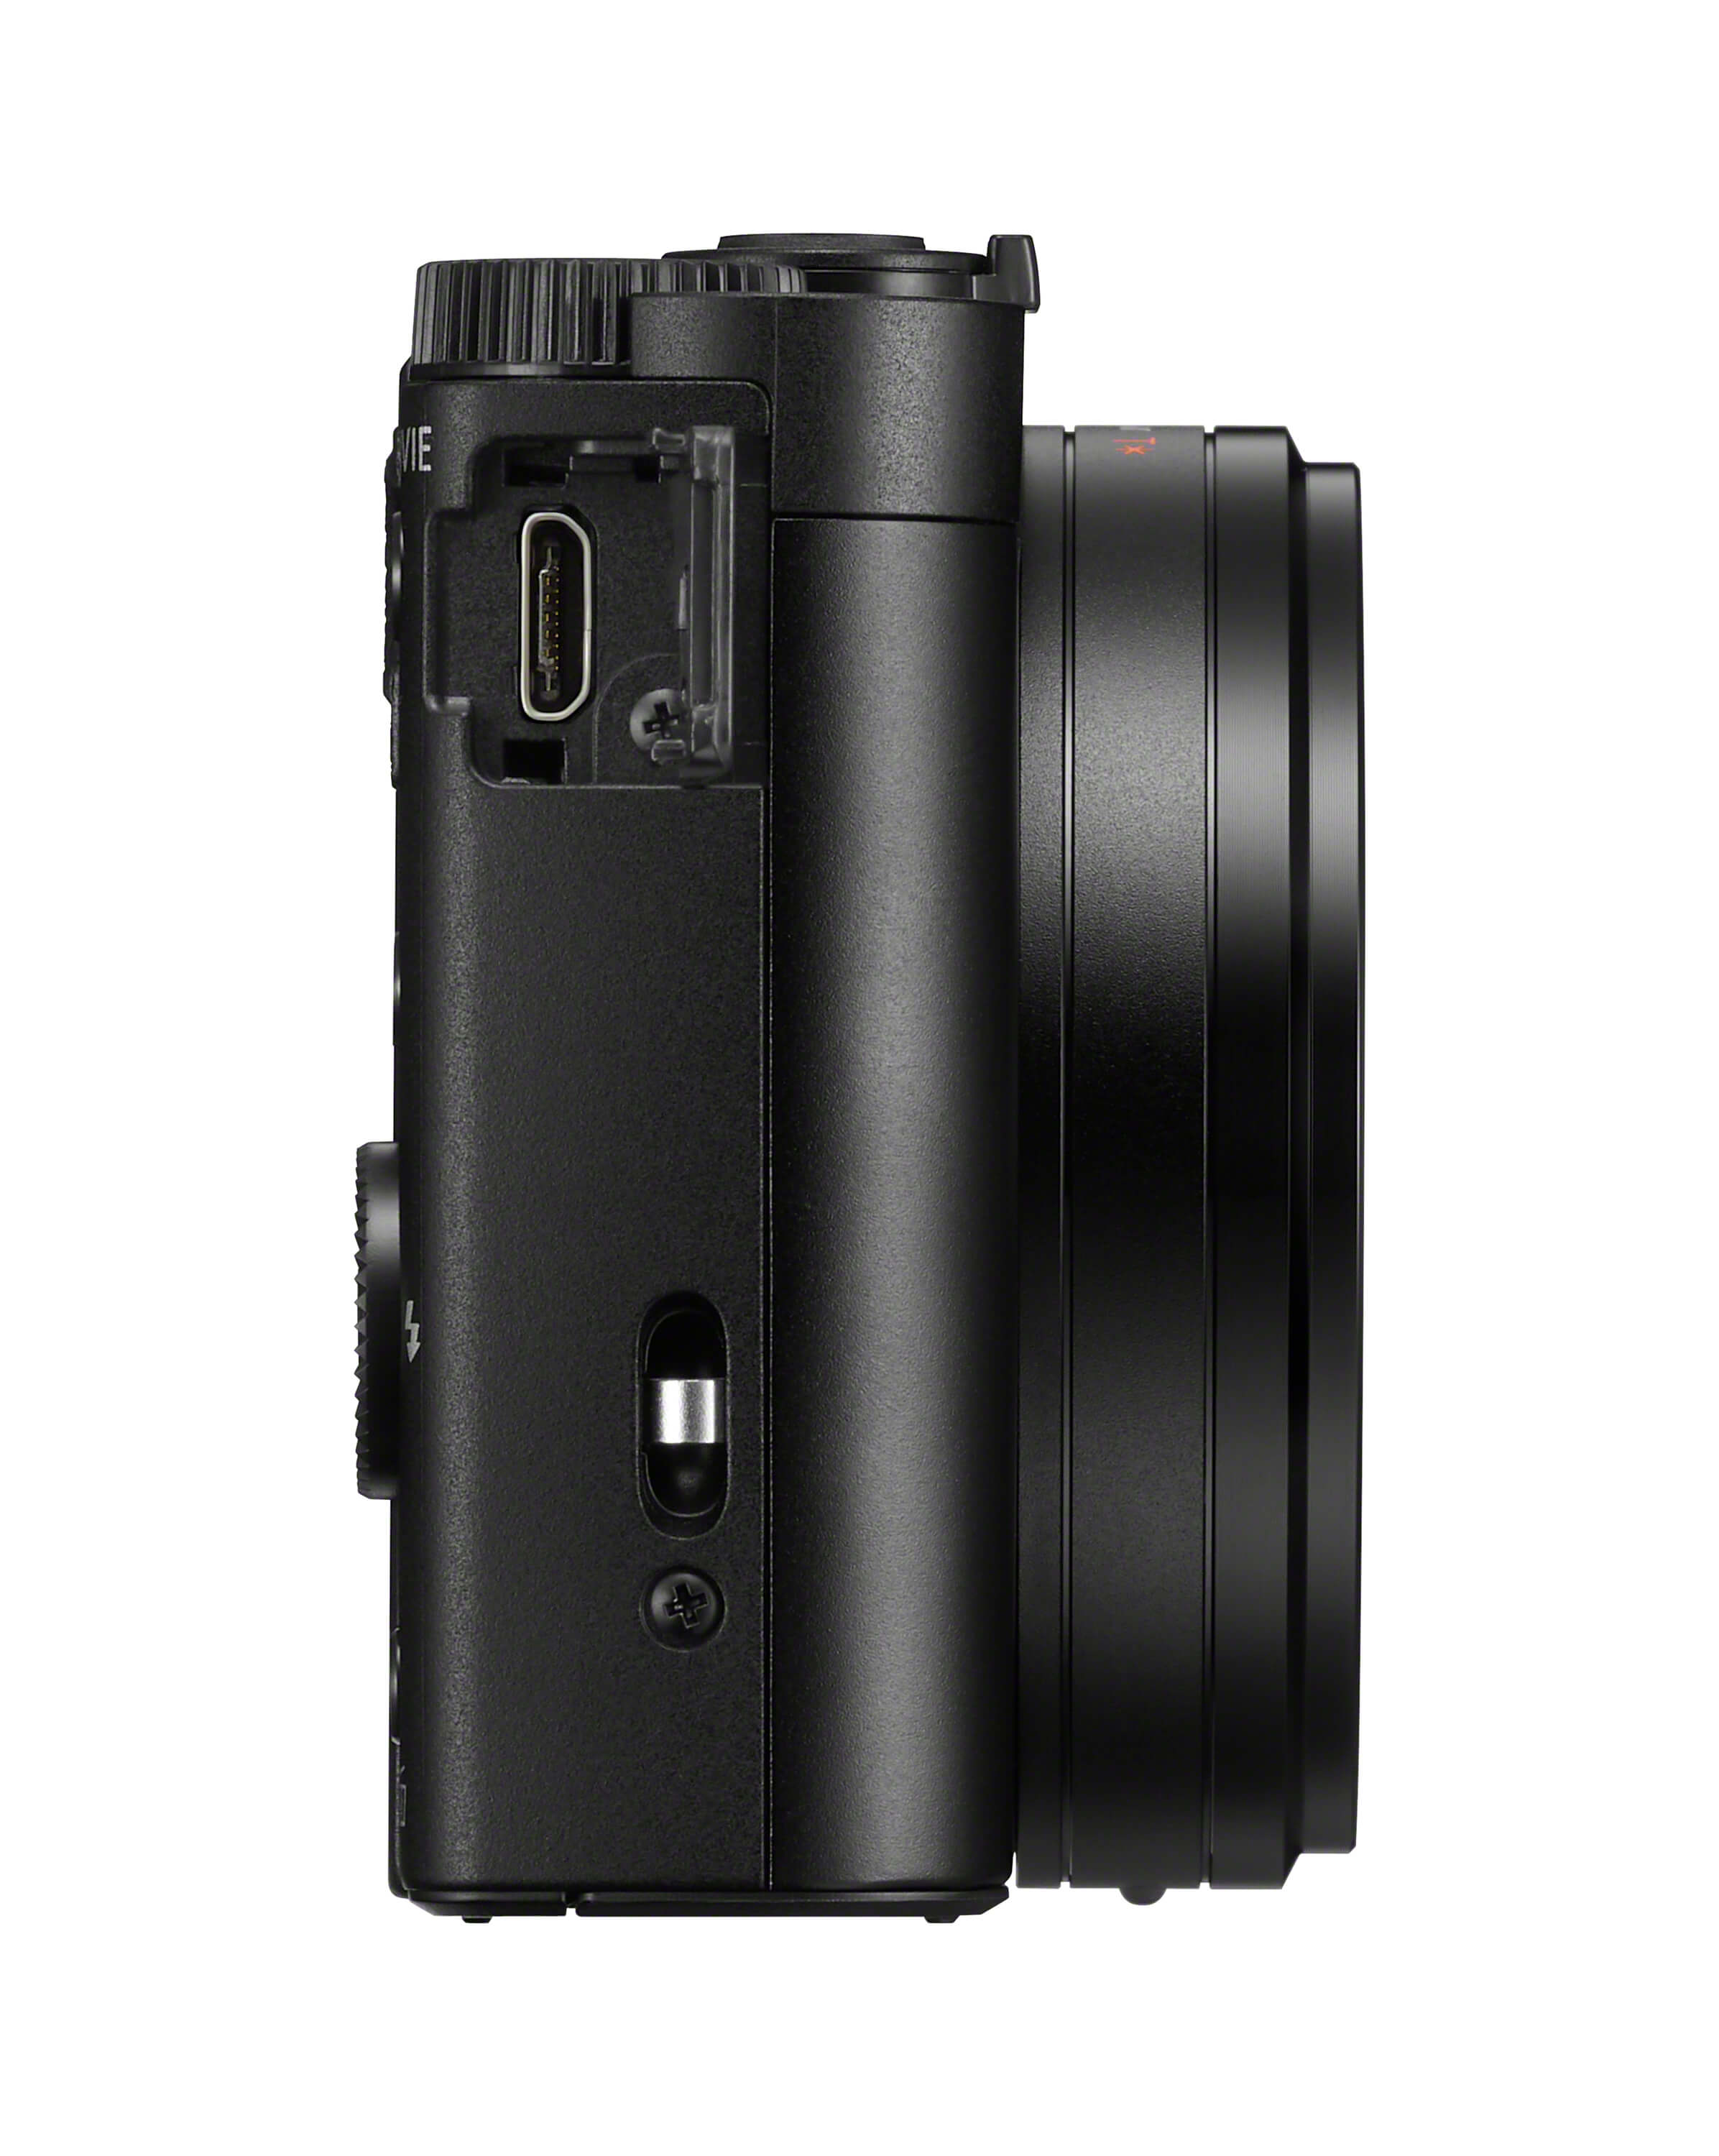 WX800 - Cyber-shot 數位相機- Sony 台灣官方購物網站- Sony Store